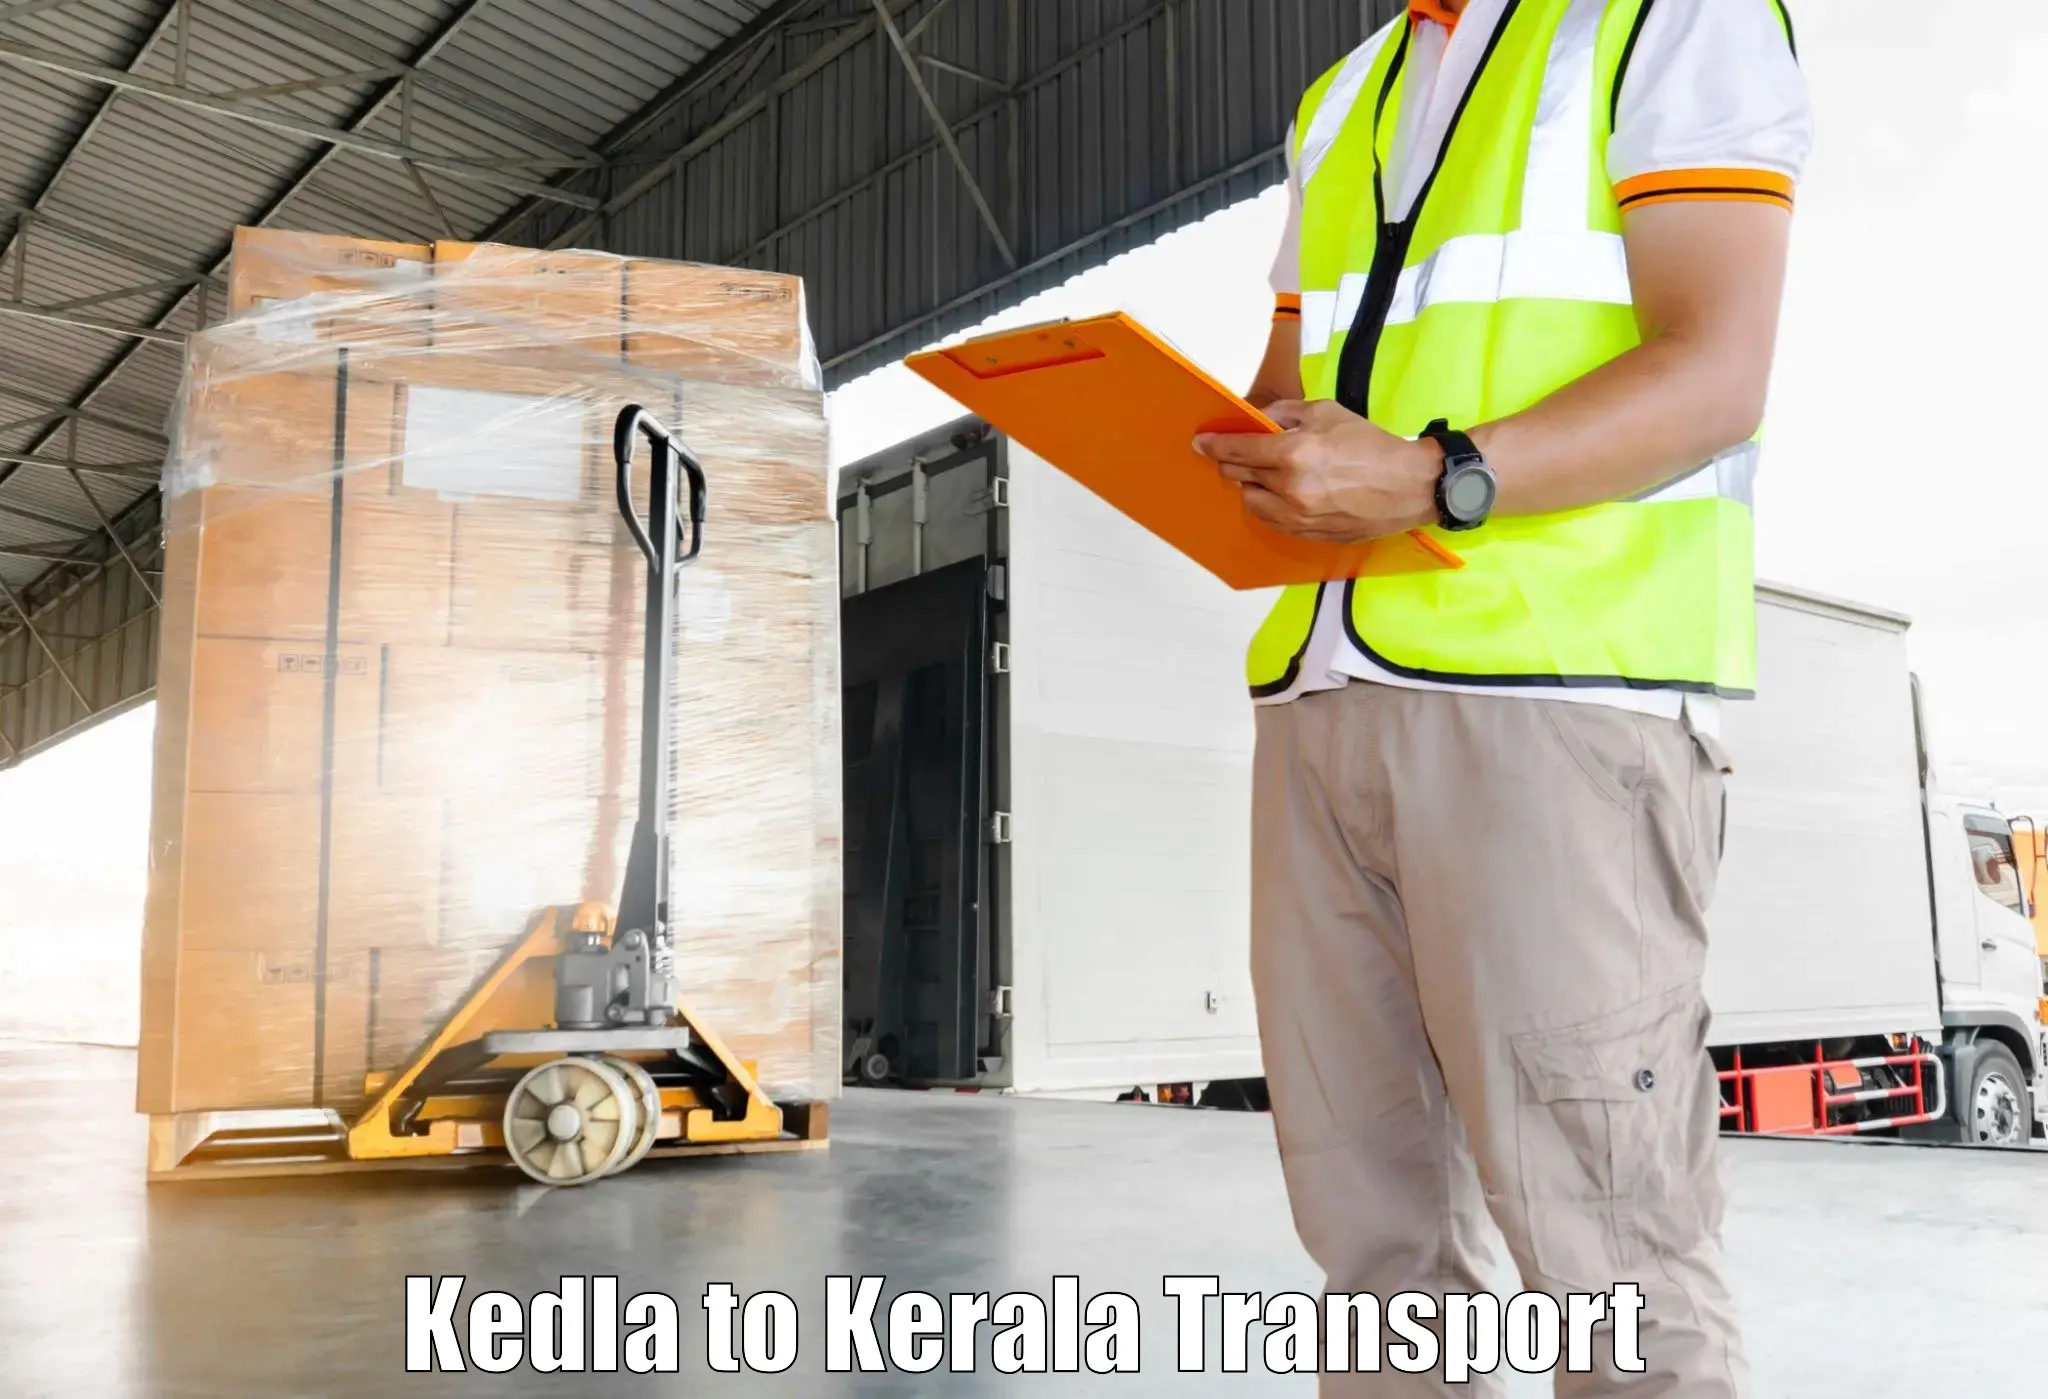 Transport in sharing Kedla to Chungathara